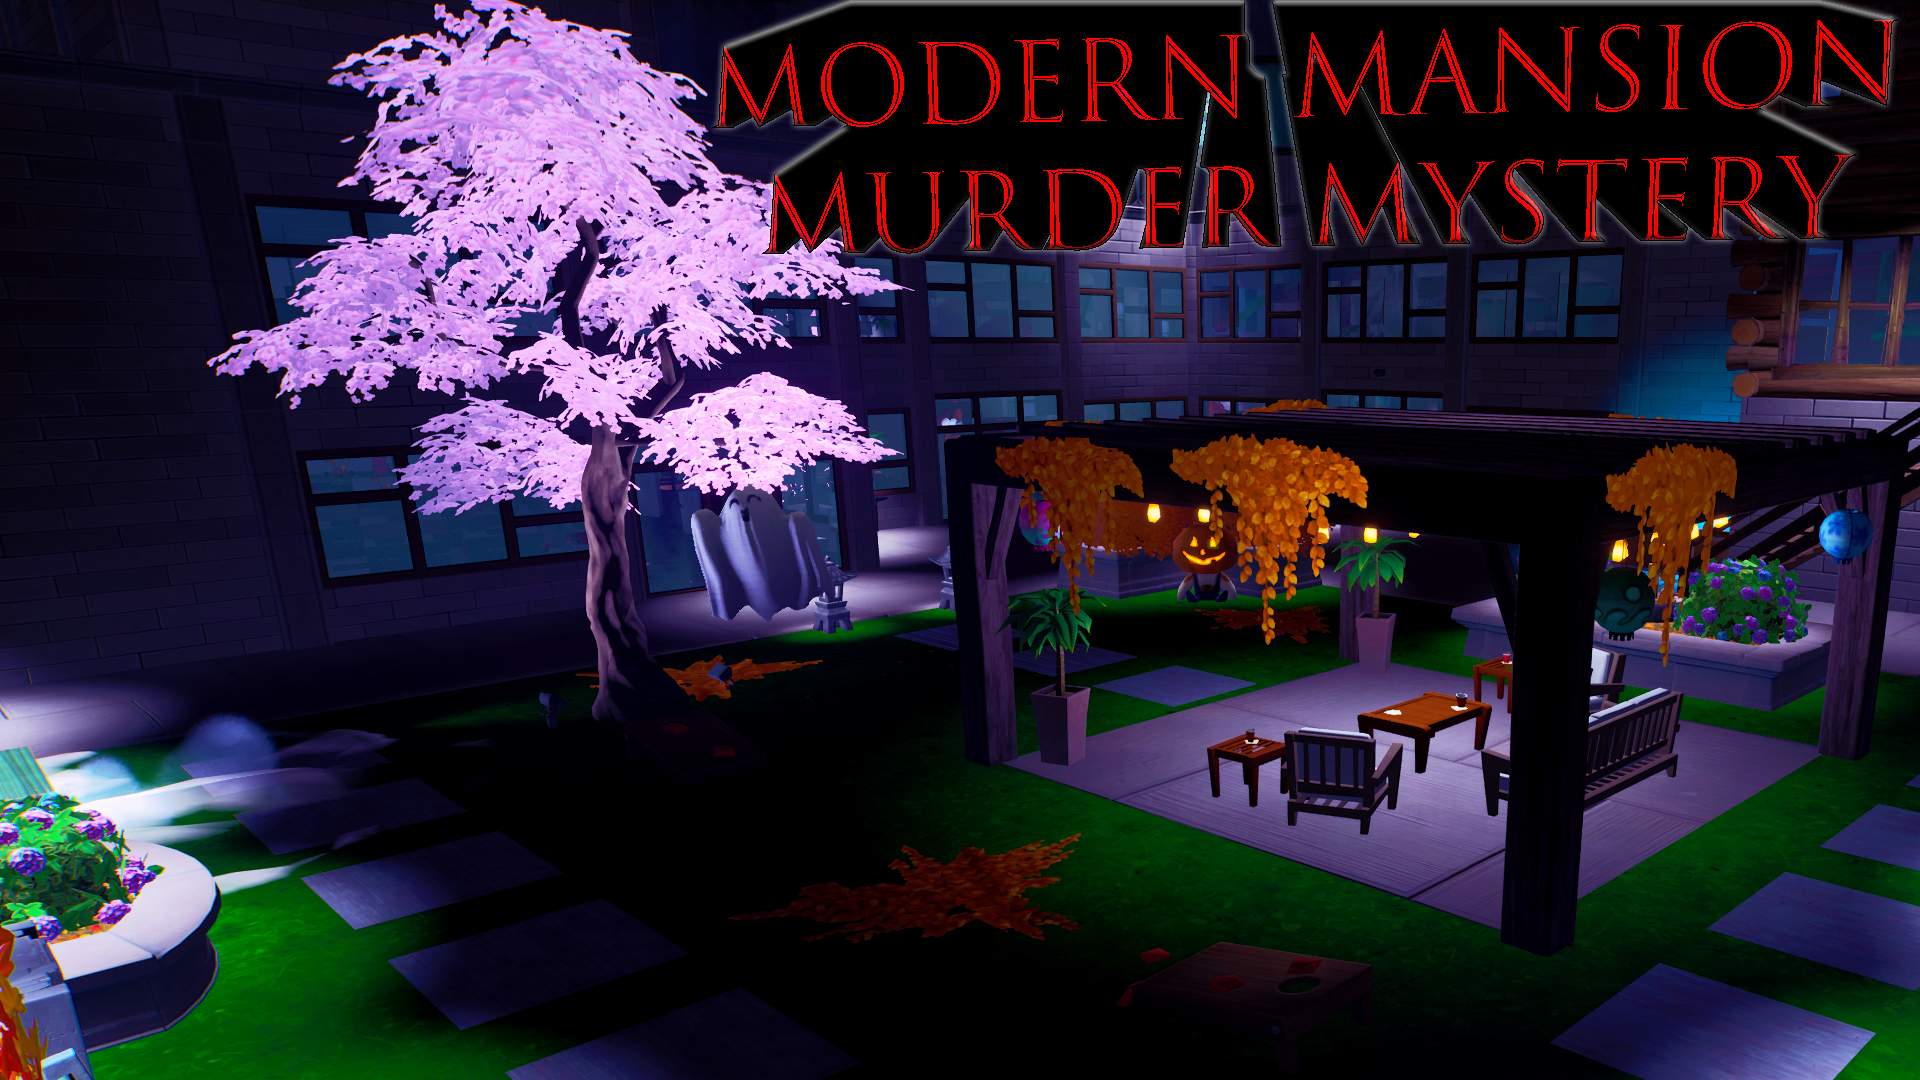 MONDERN MANSION MURDERY MYSTERY